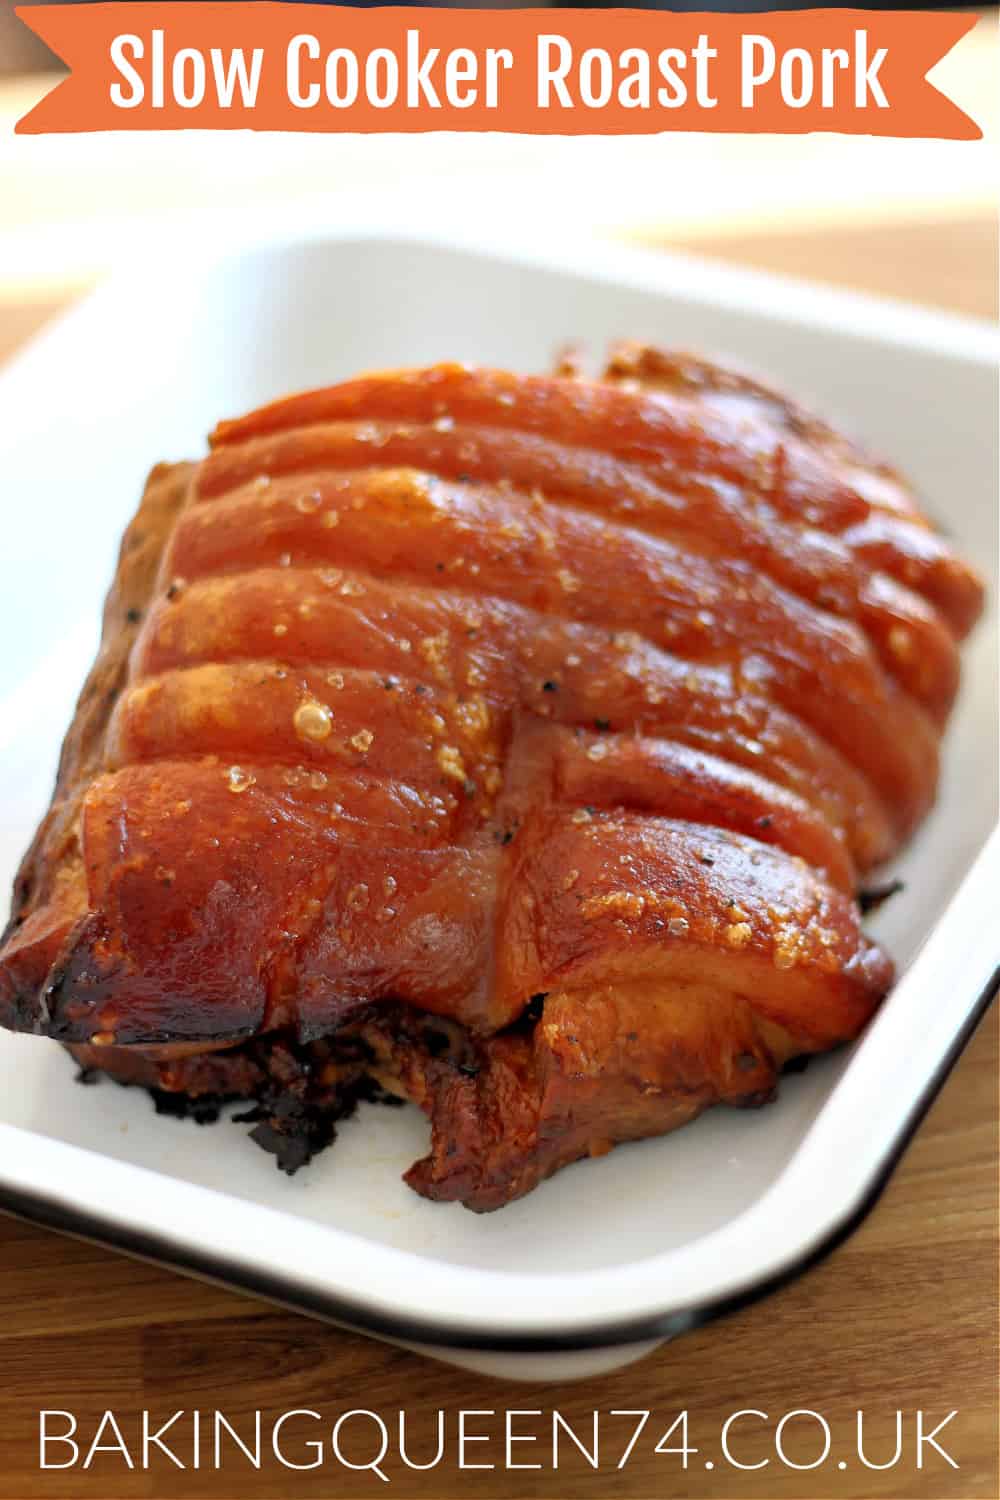 Roast pork with text overlay ("slow cooker roast pork").